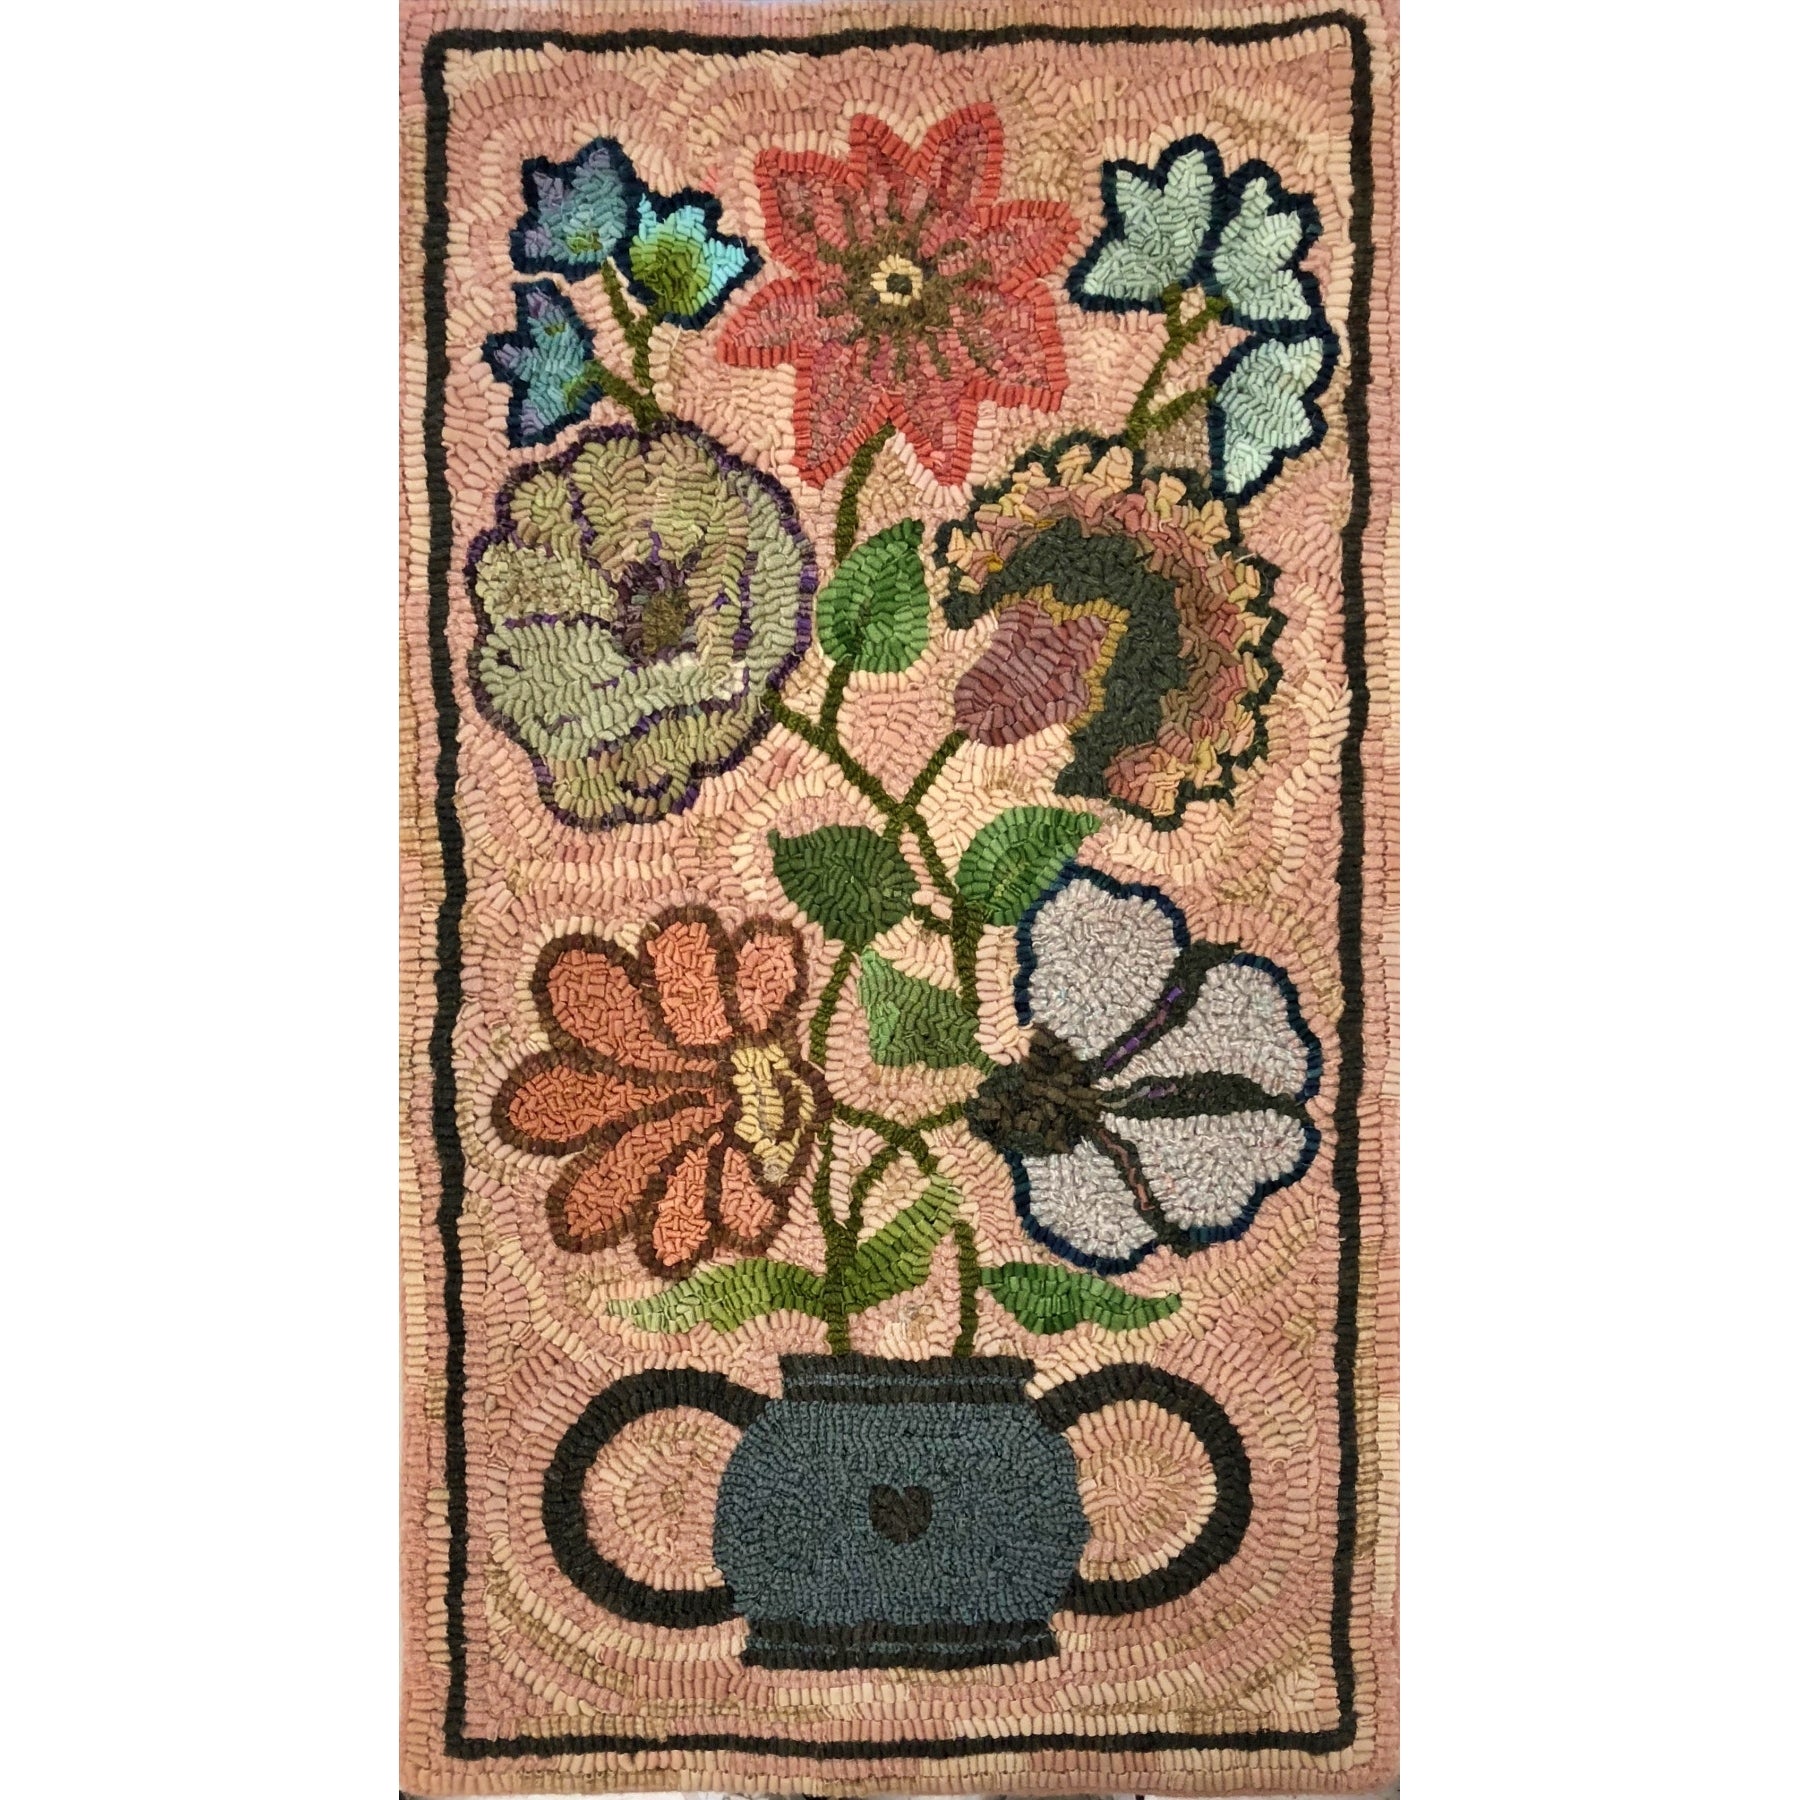 Colchester Vase, rug hooked by Chris Needels